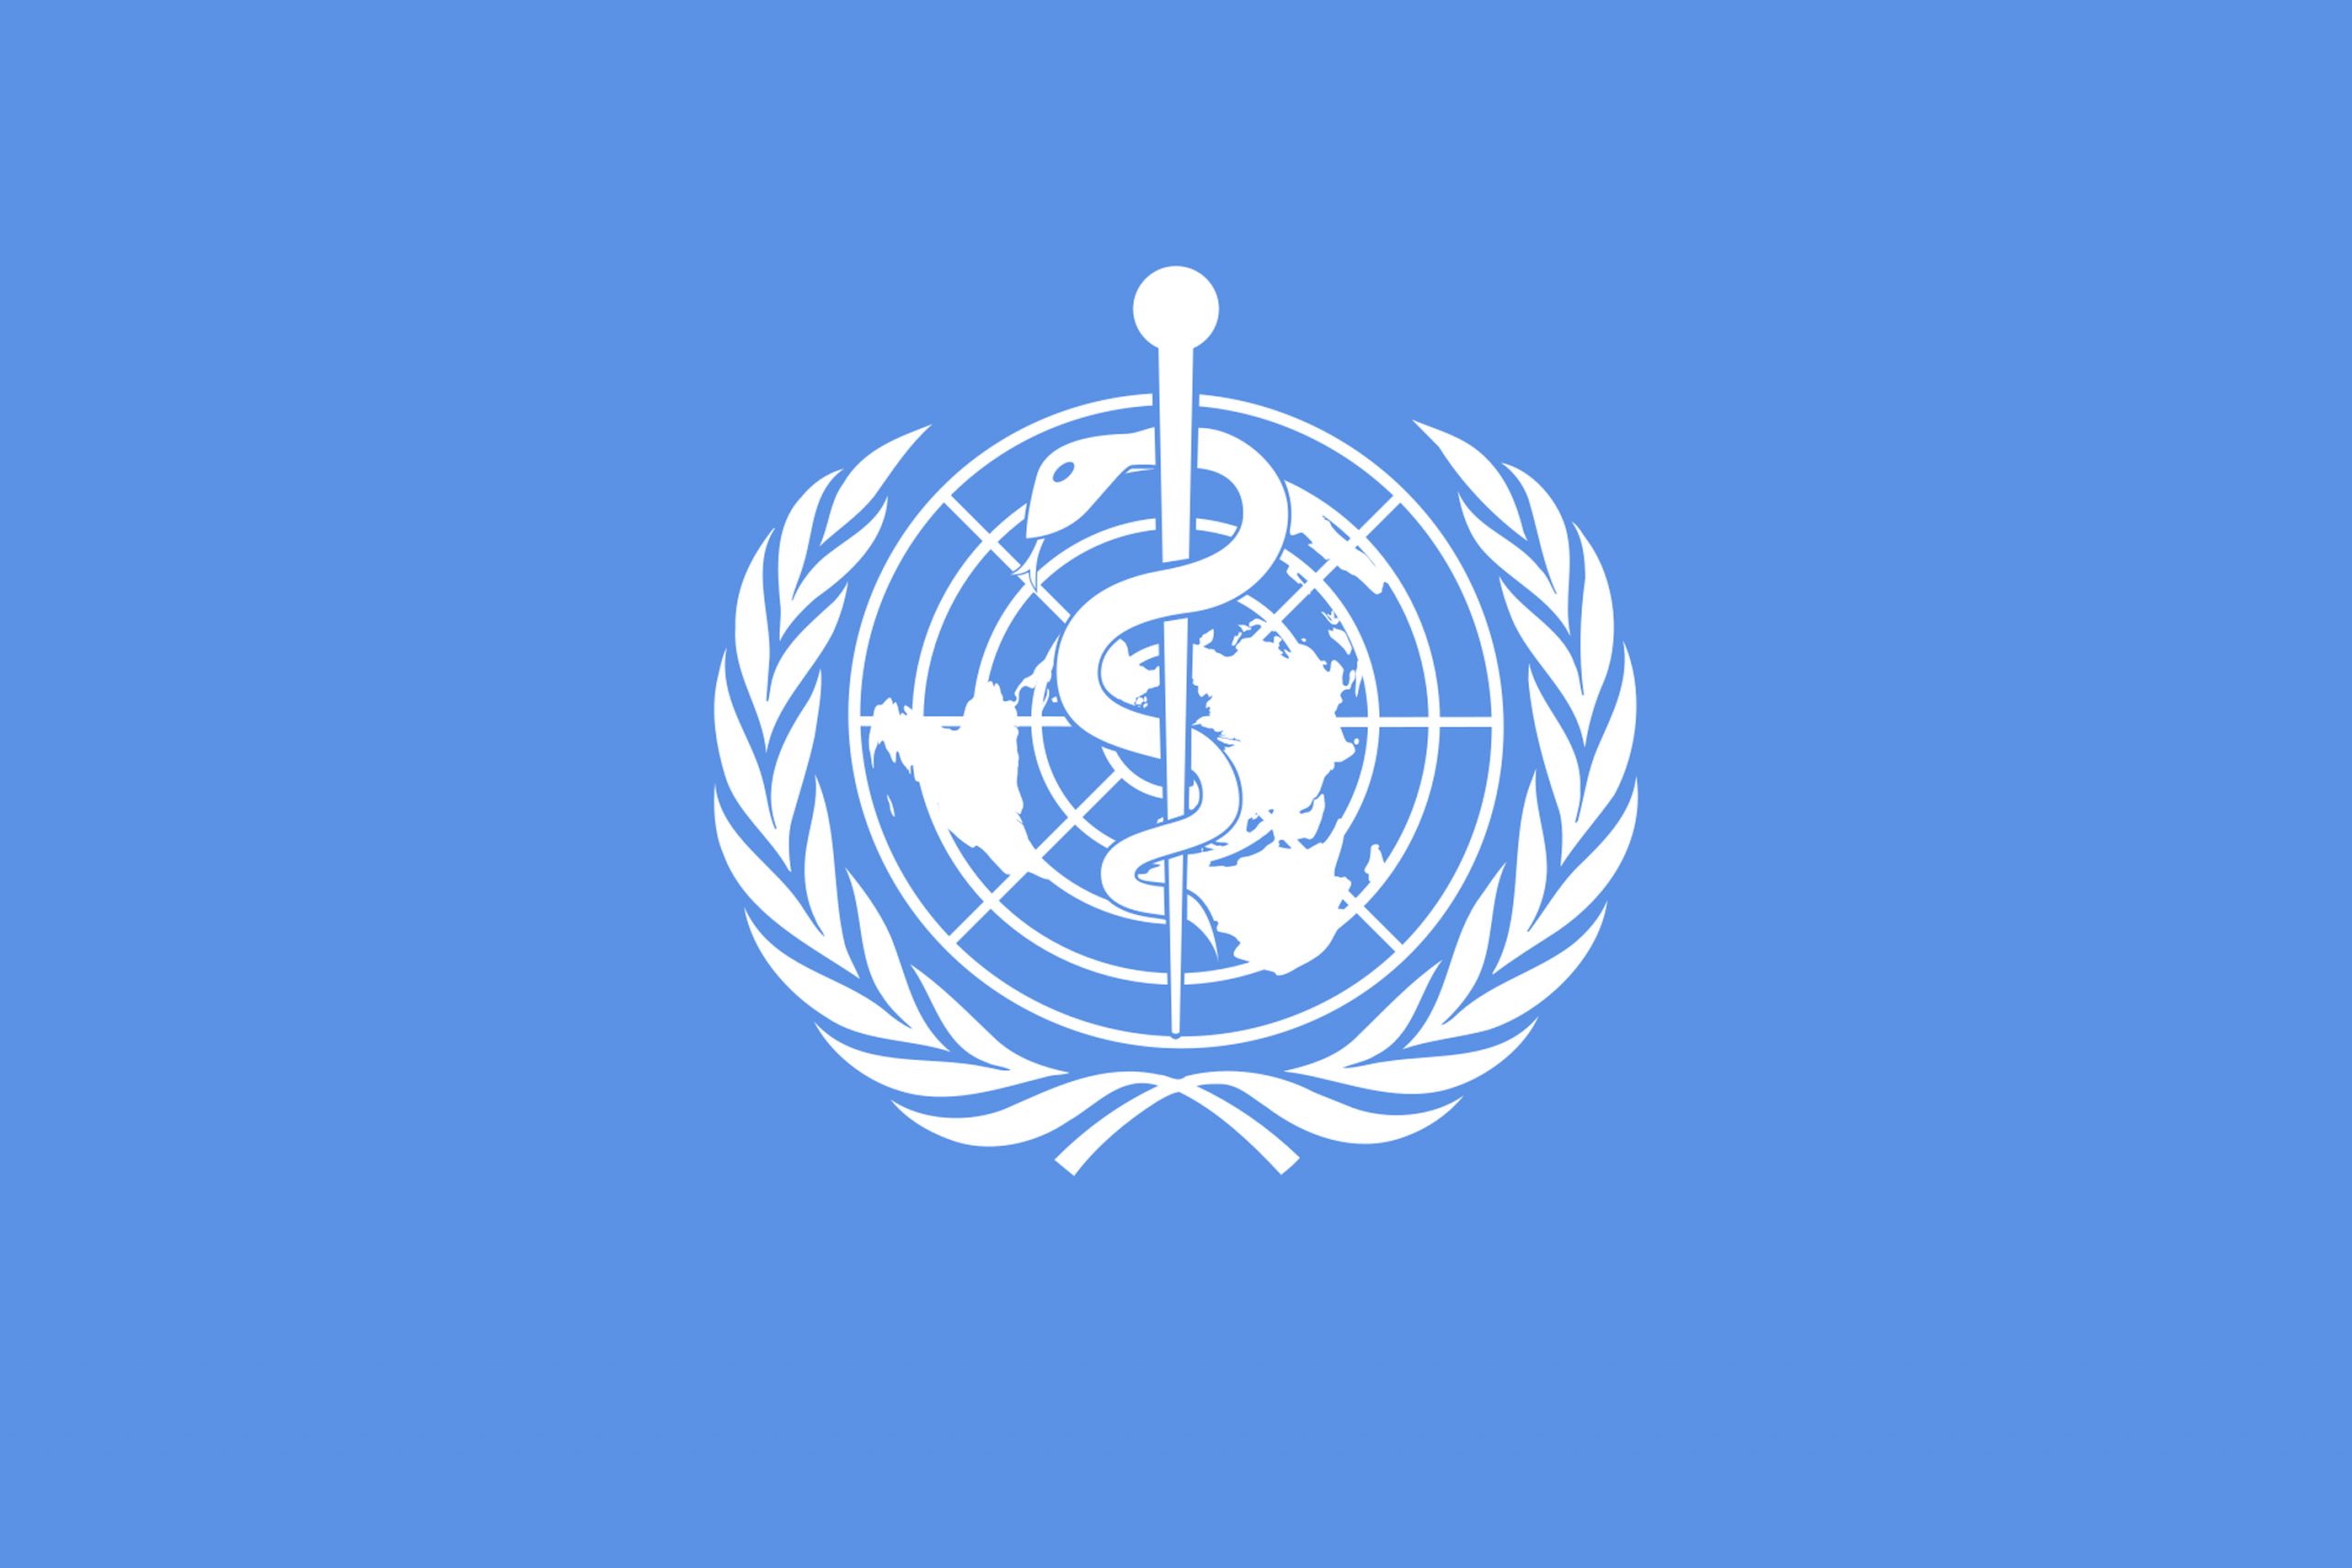 https://depositphotos.com/5304453/stock-photo-world-health-organization-flag.html